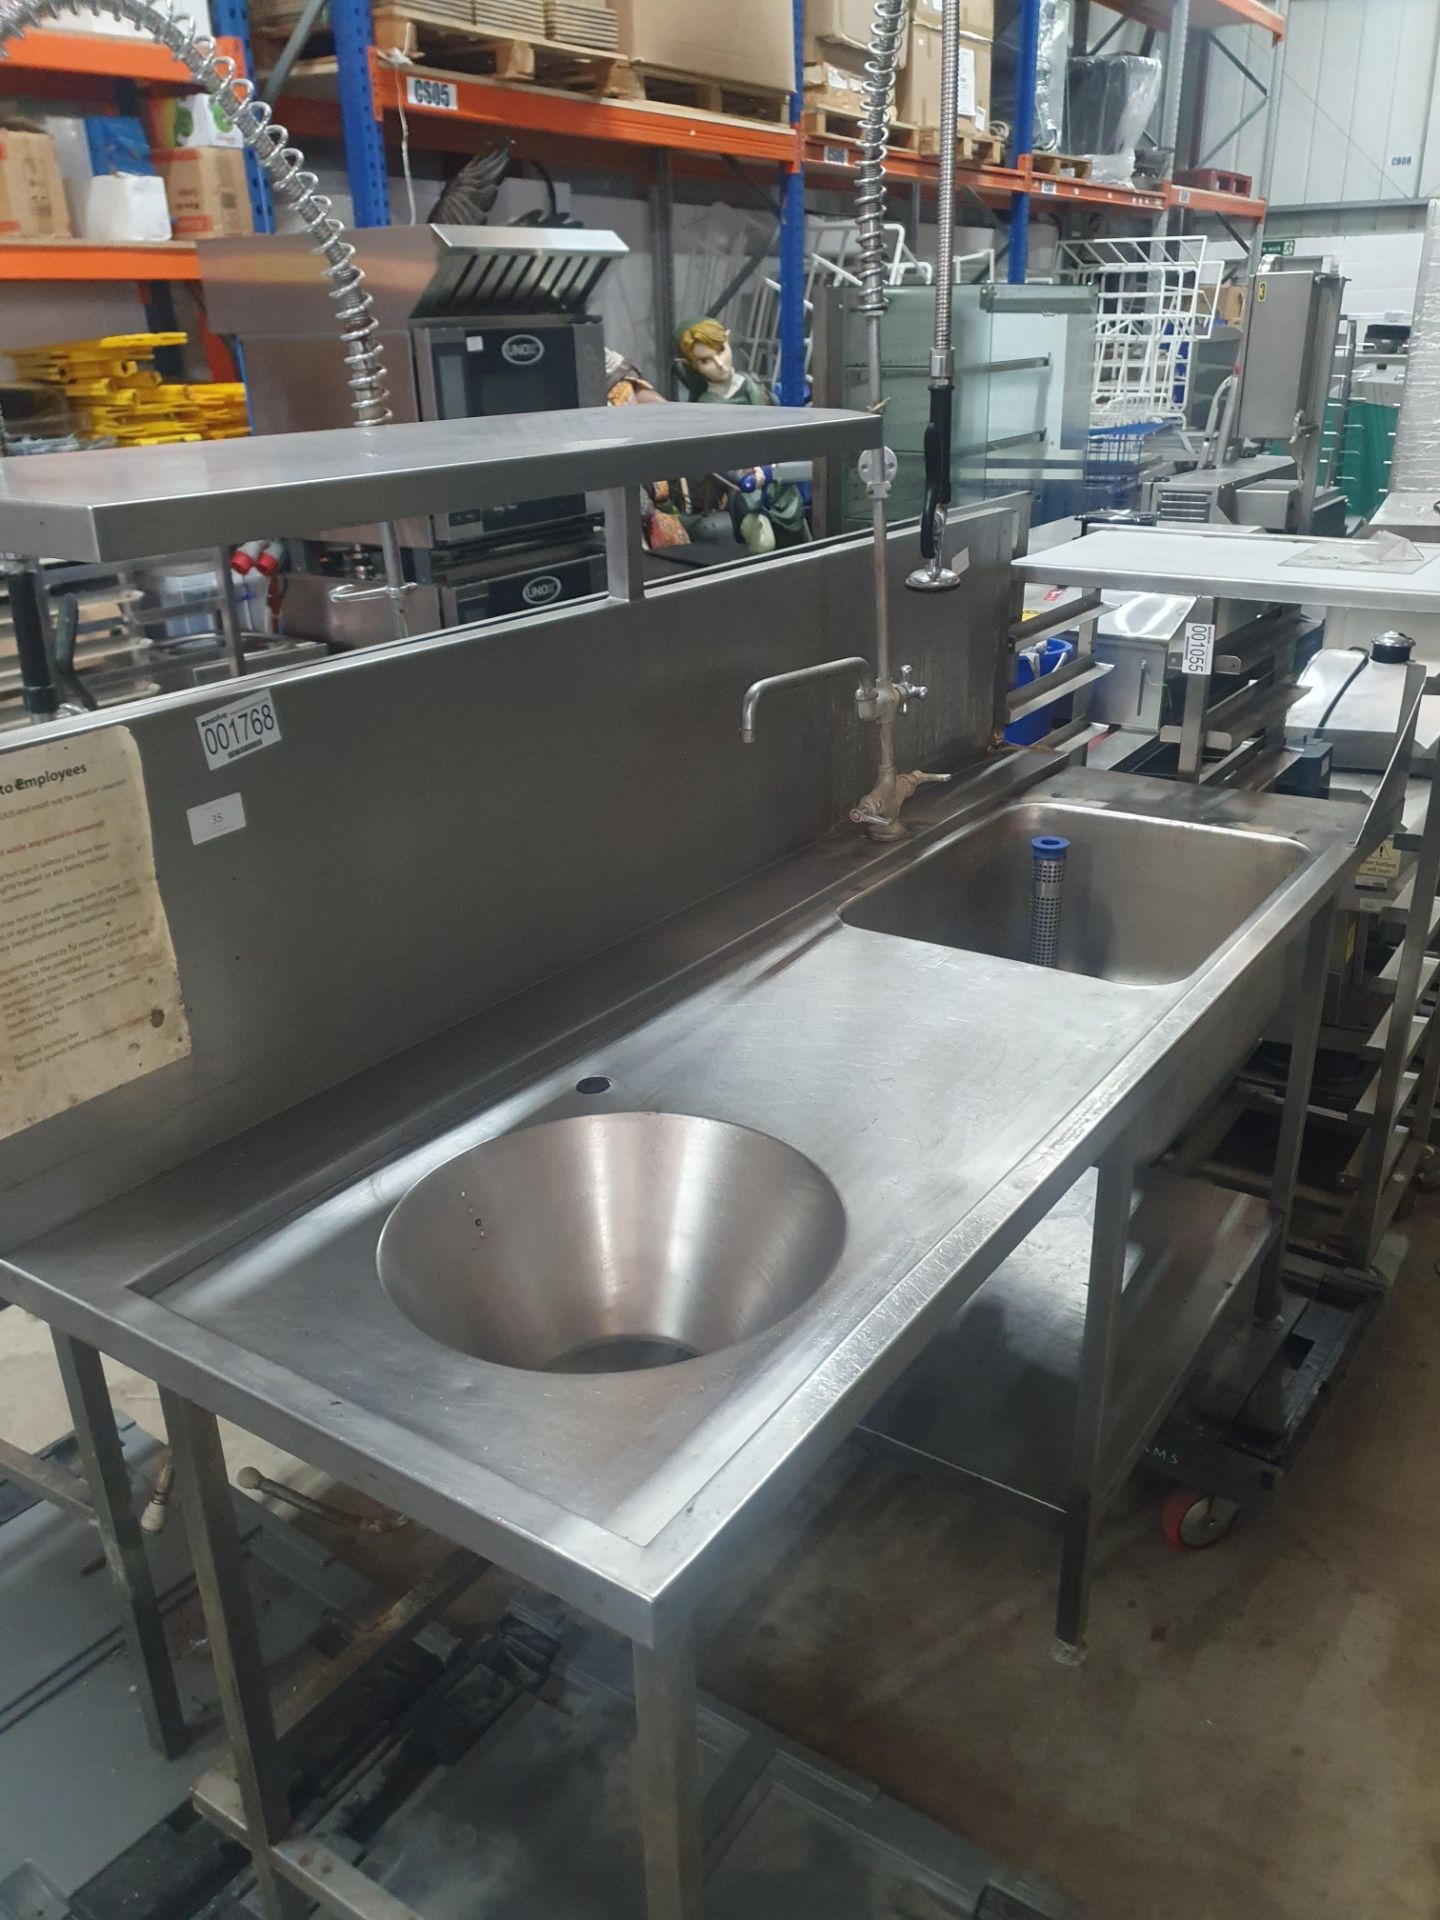 Stainless Steel Potwashing Sink With Bin Chute & Wash Arm & Overshelf - Image 3 of 3